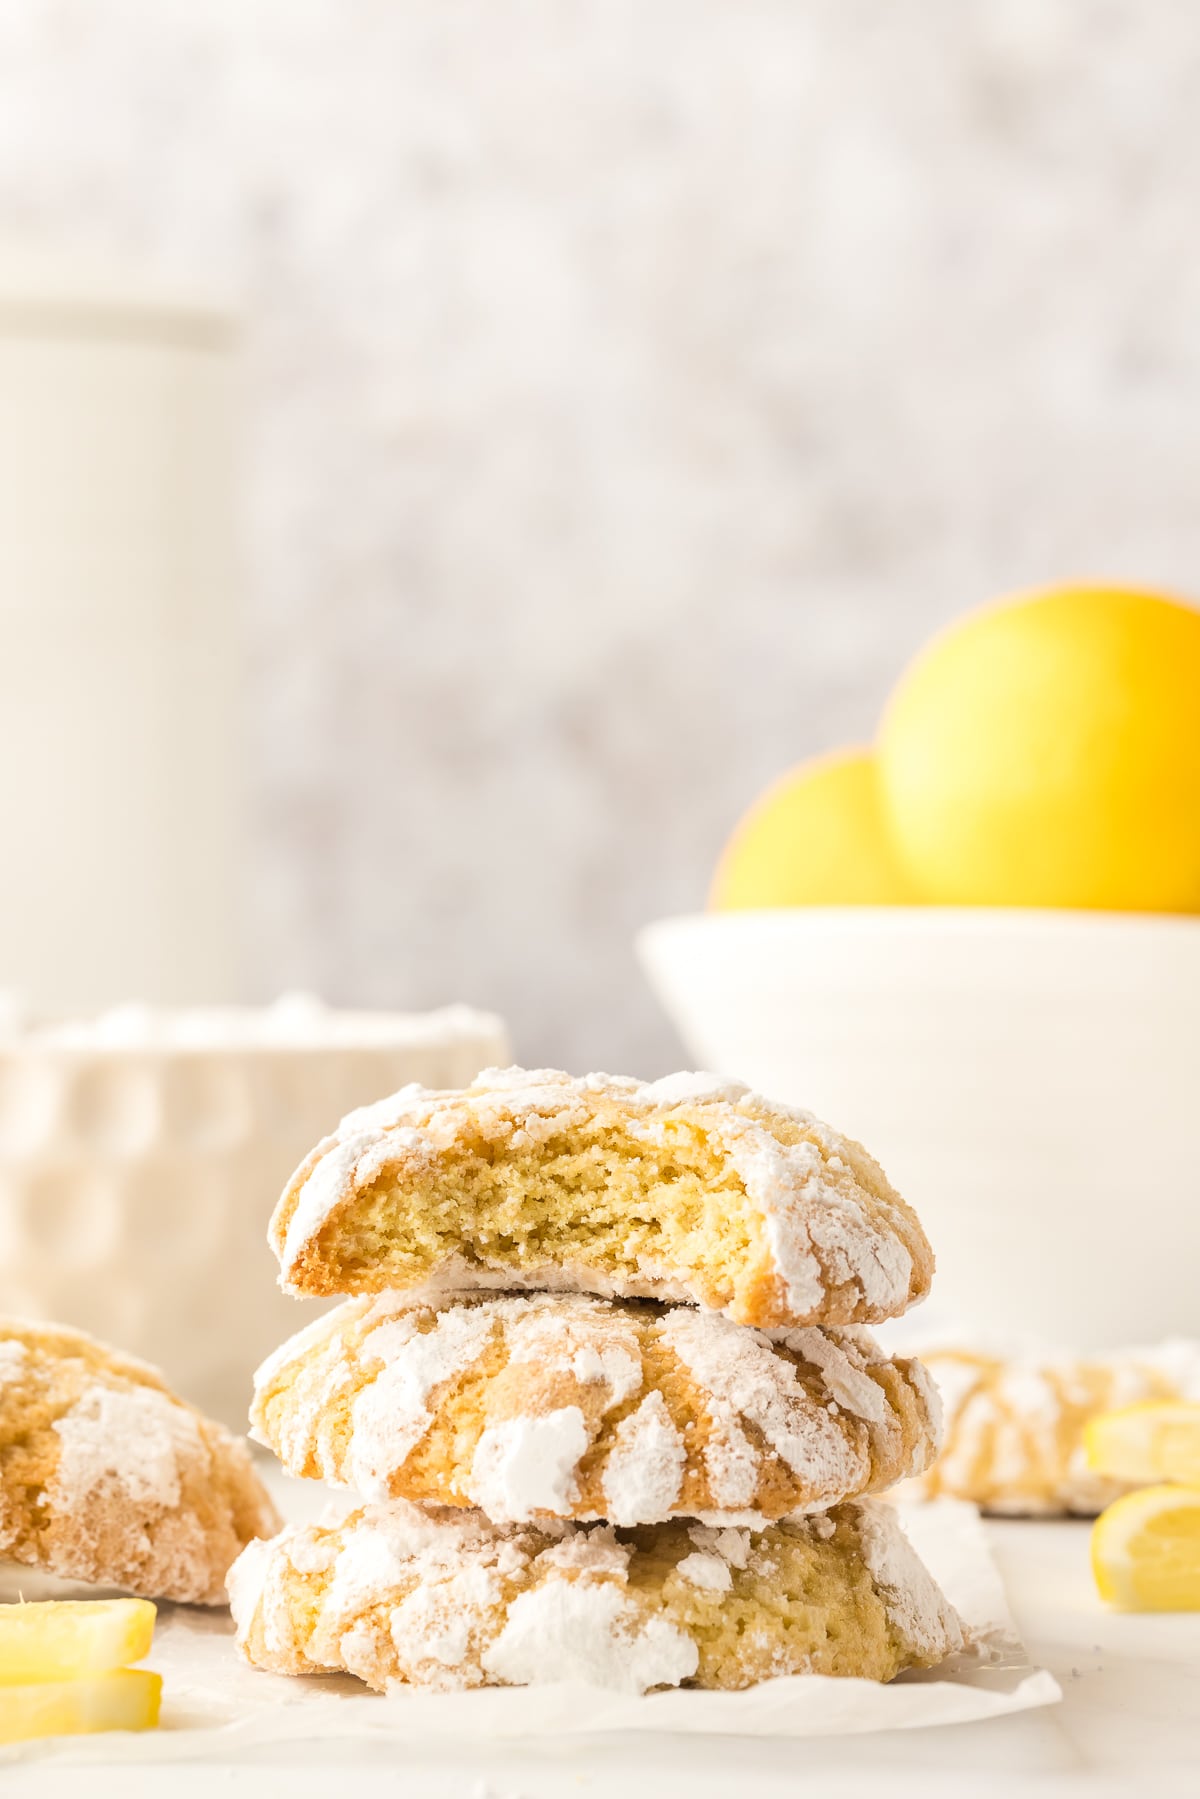 Lemon crinkle cookies with lemons in the background.